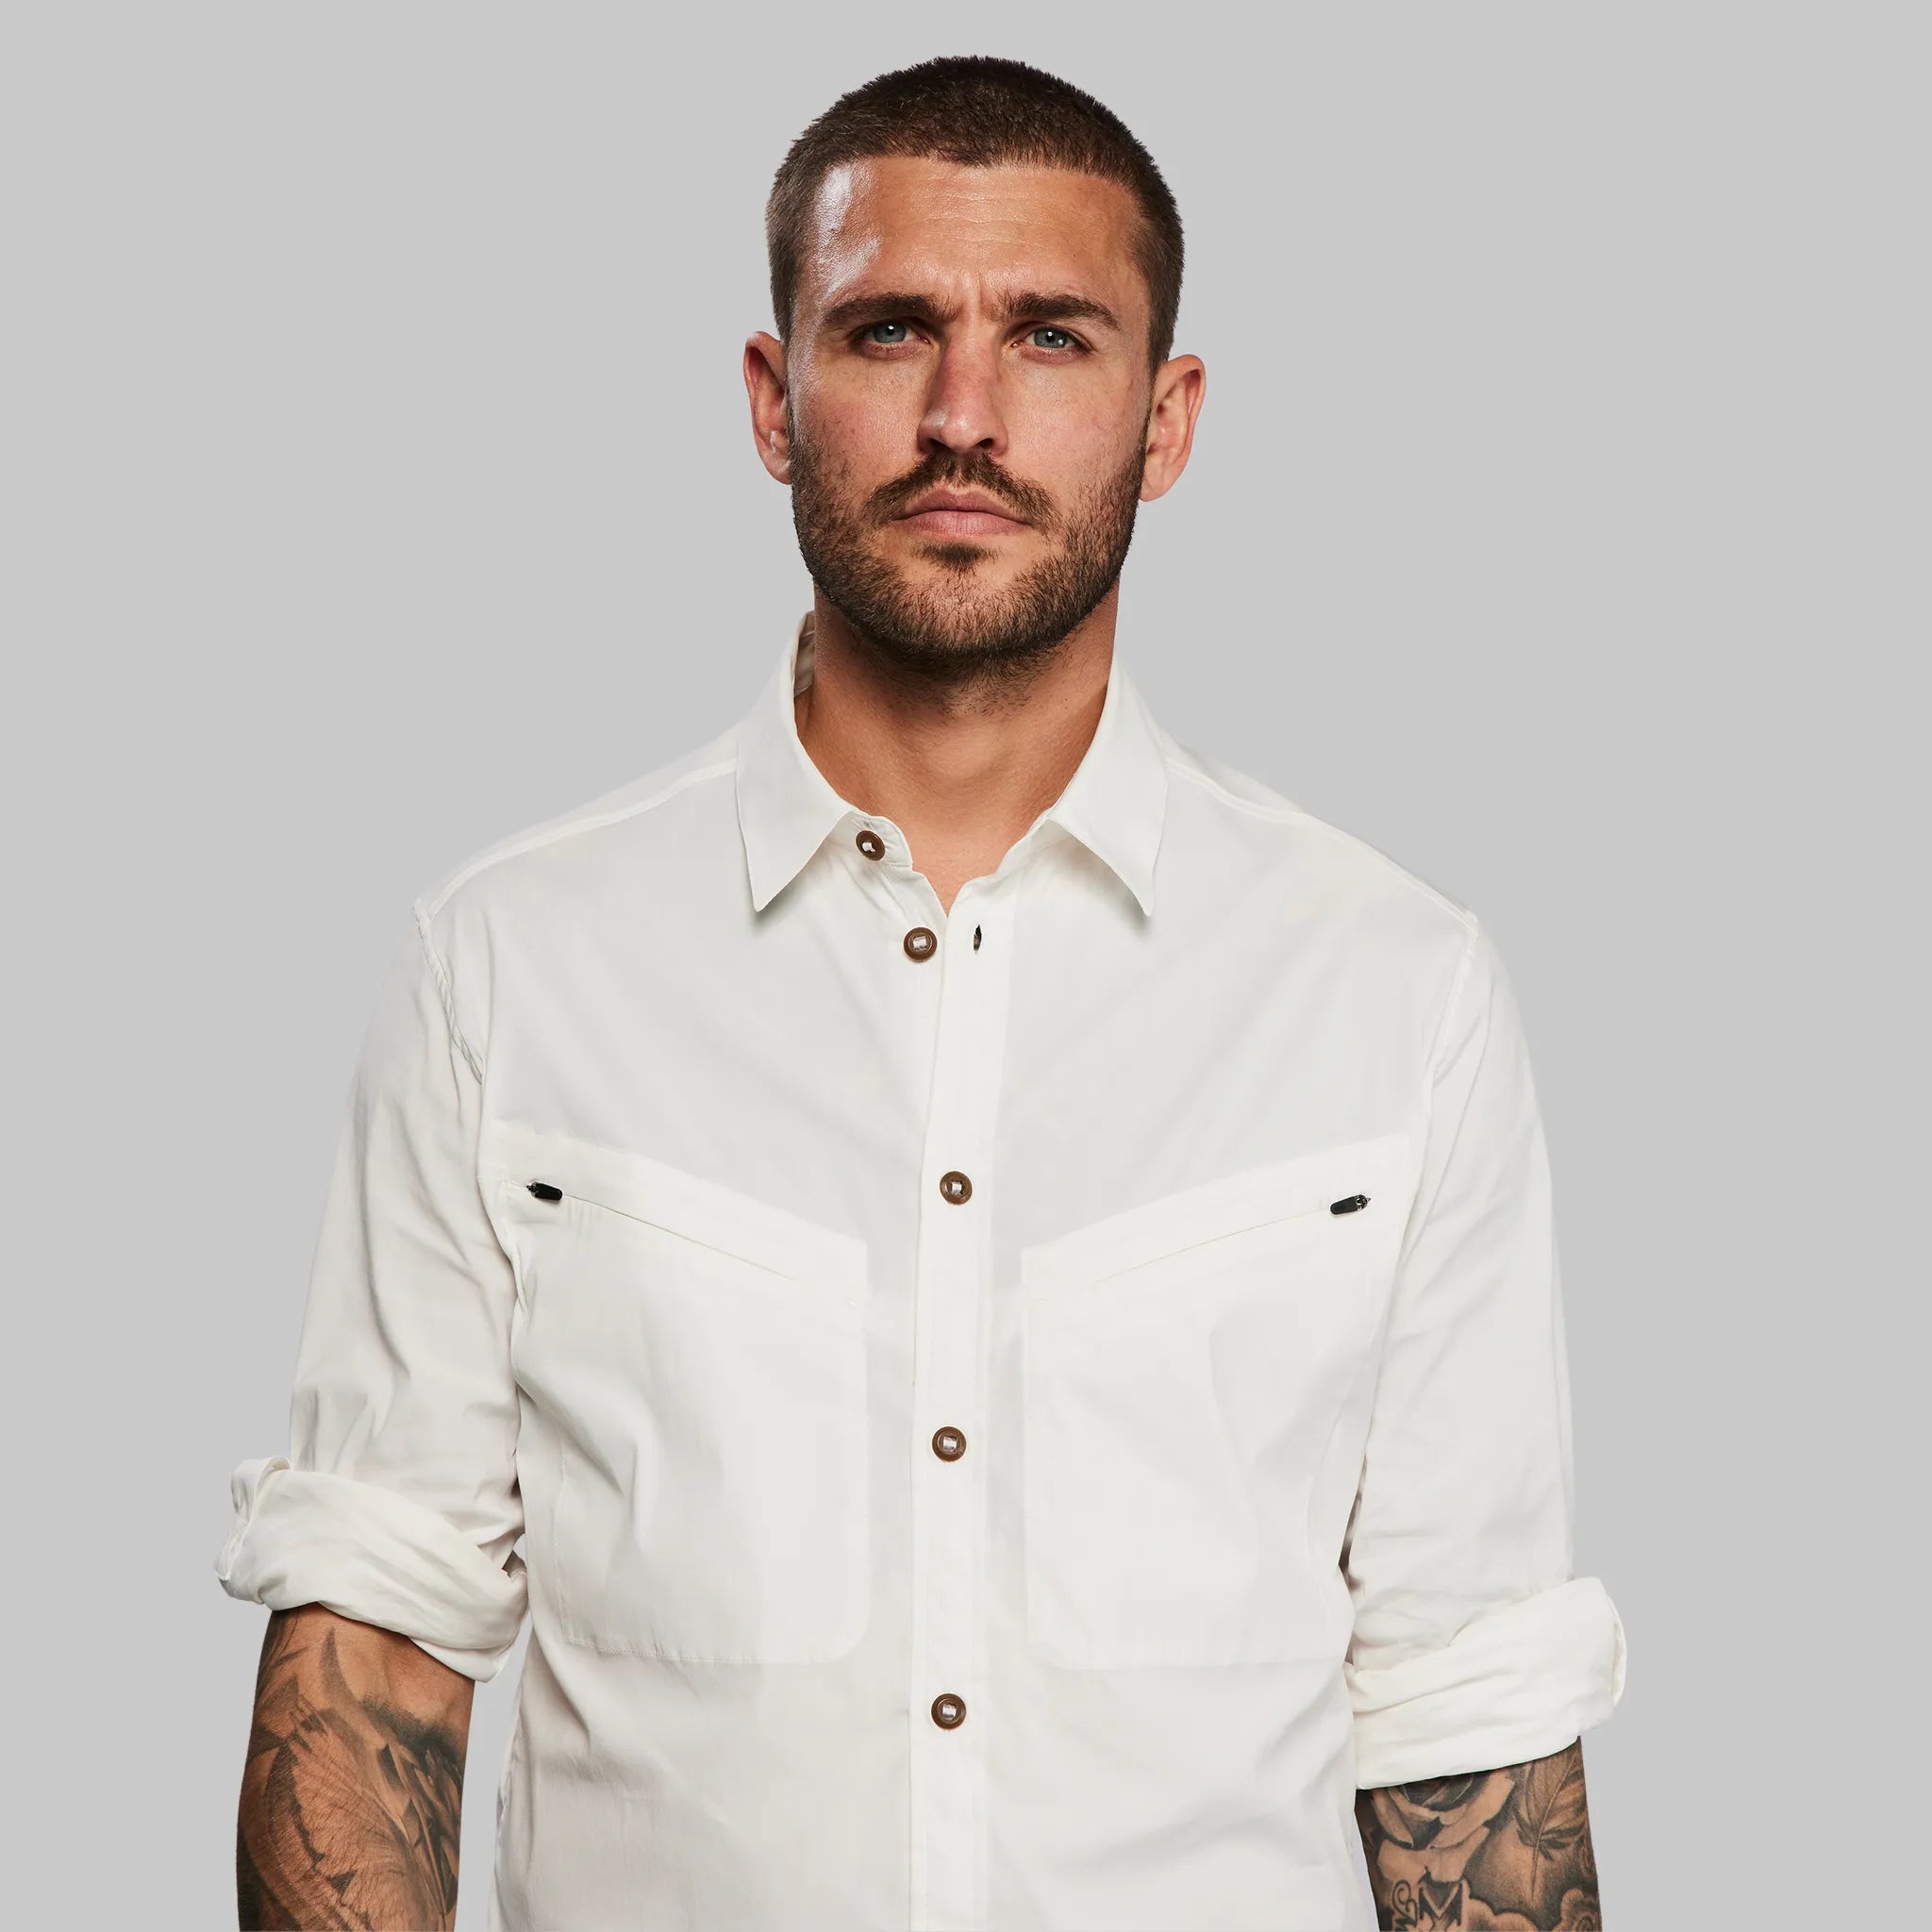 Equator Shirt with Collar. White edition